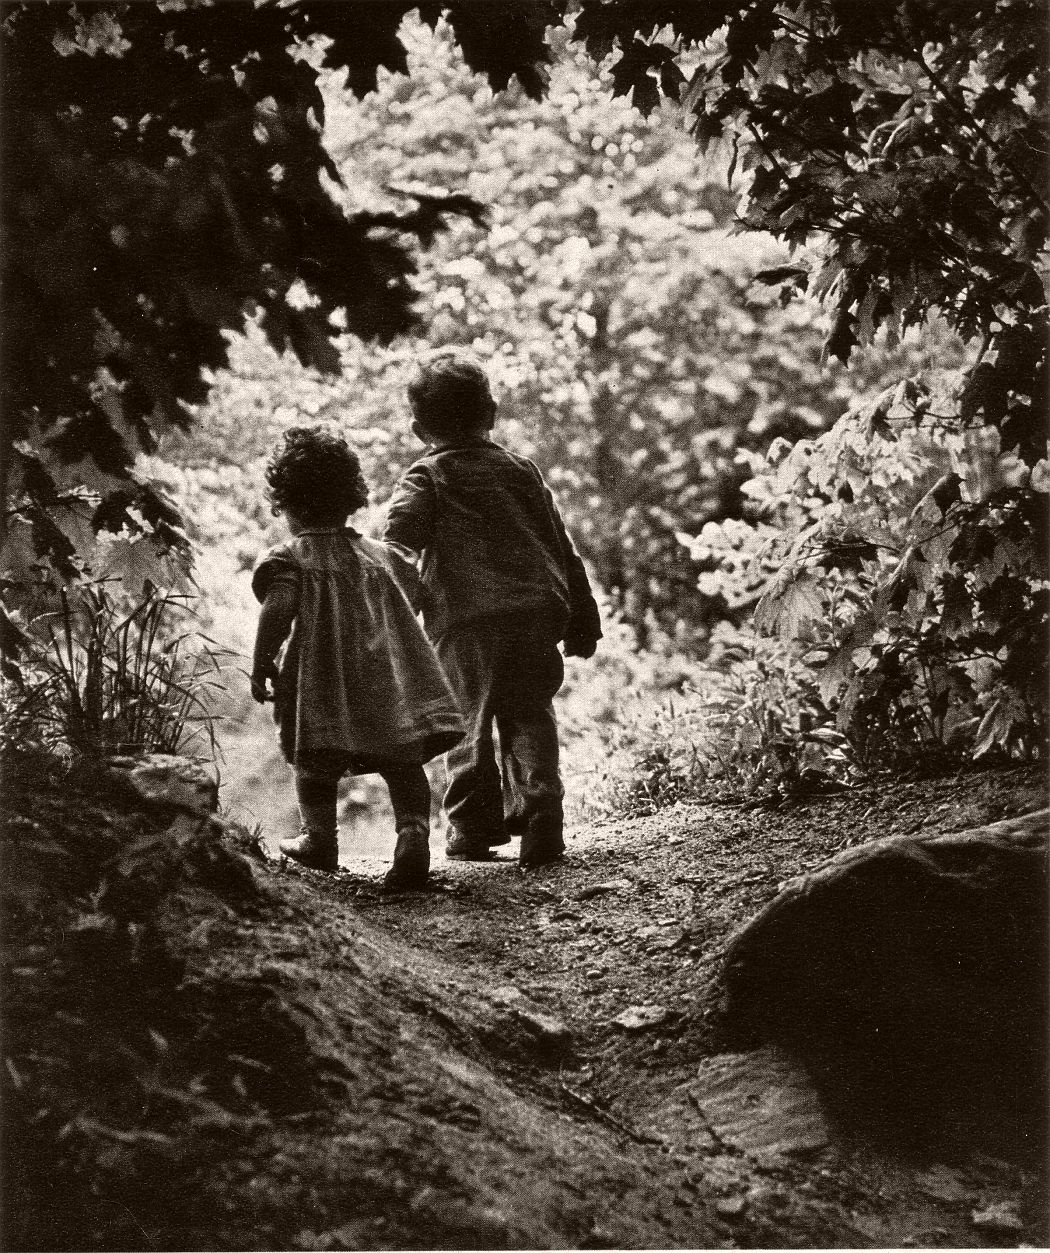 A Walk To The Paradise Garden, 1946 by Eugene Smith